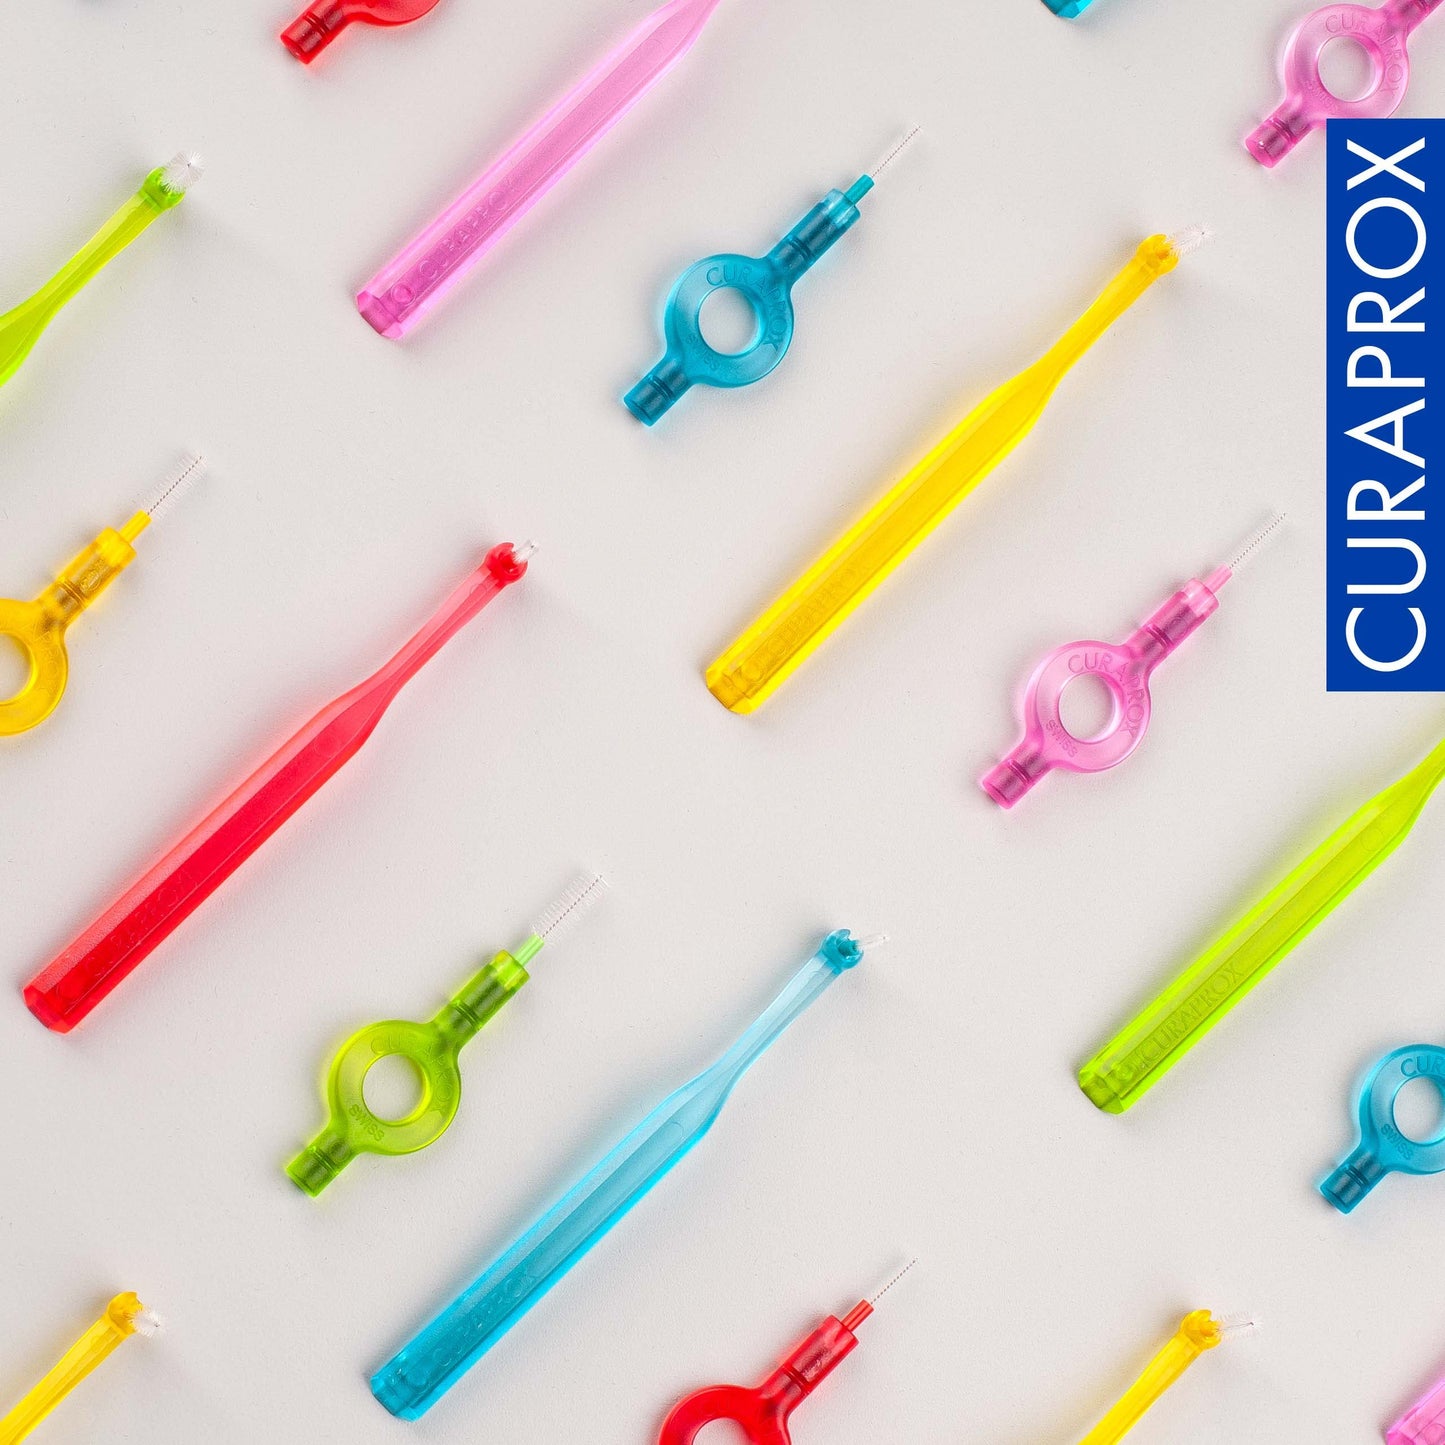 Curaprox CPS 06 Prime Start Interdental Brush Kit, Turquoise - 5 x 0.6mm - 2.2mm Interdental Brushes + 2 Interdental Toothbrush holders